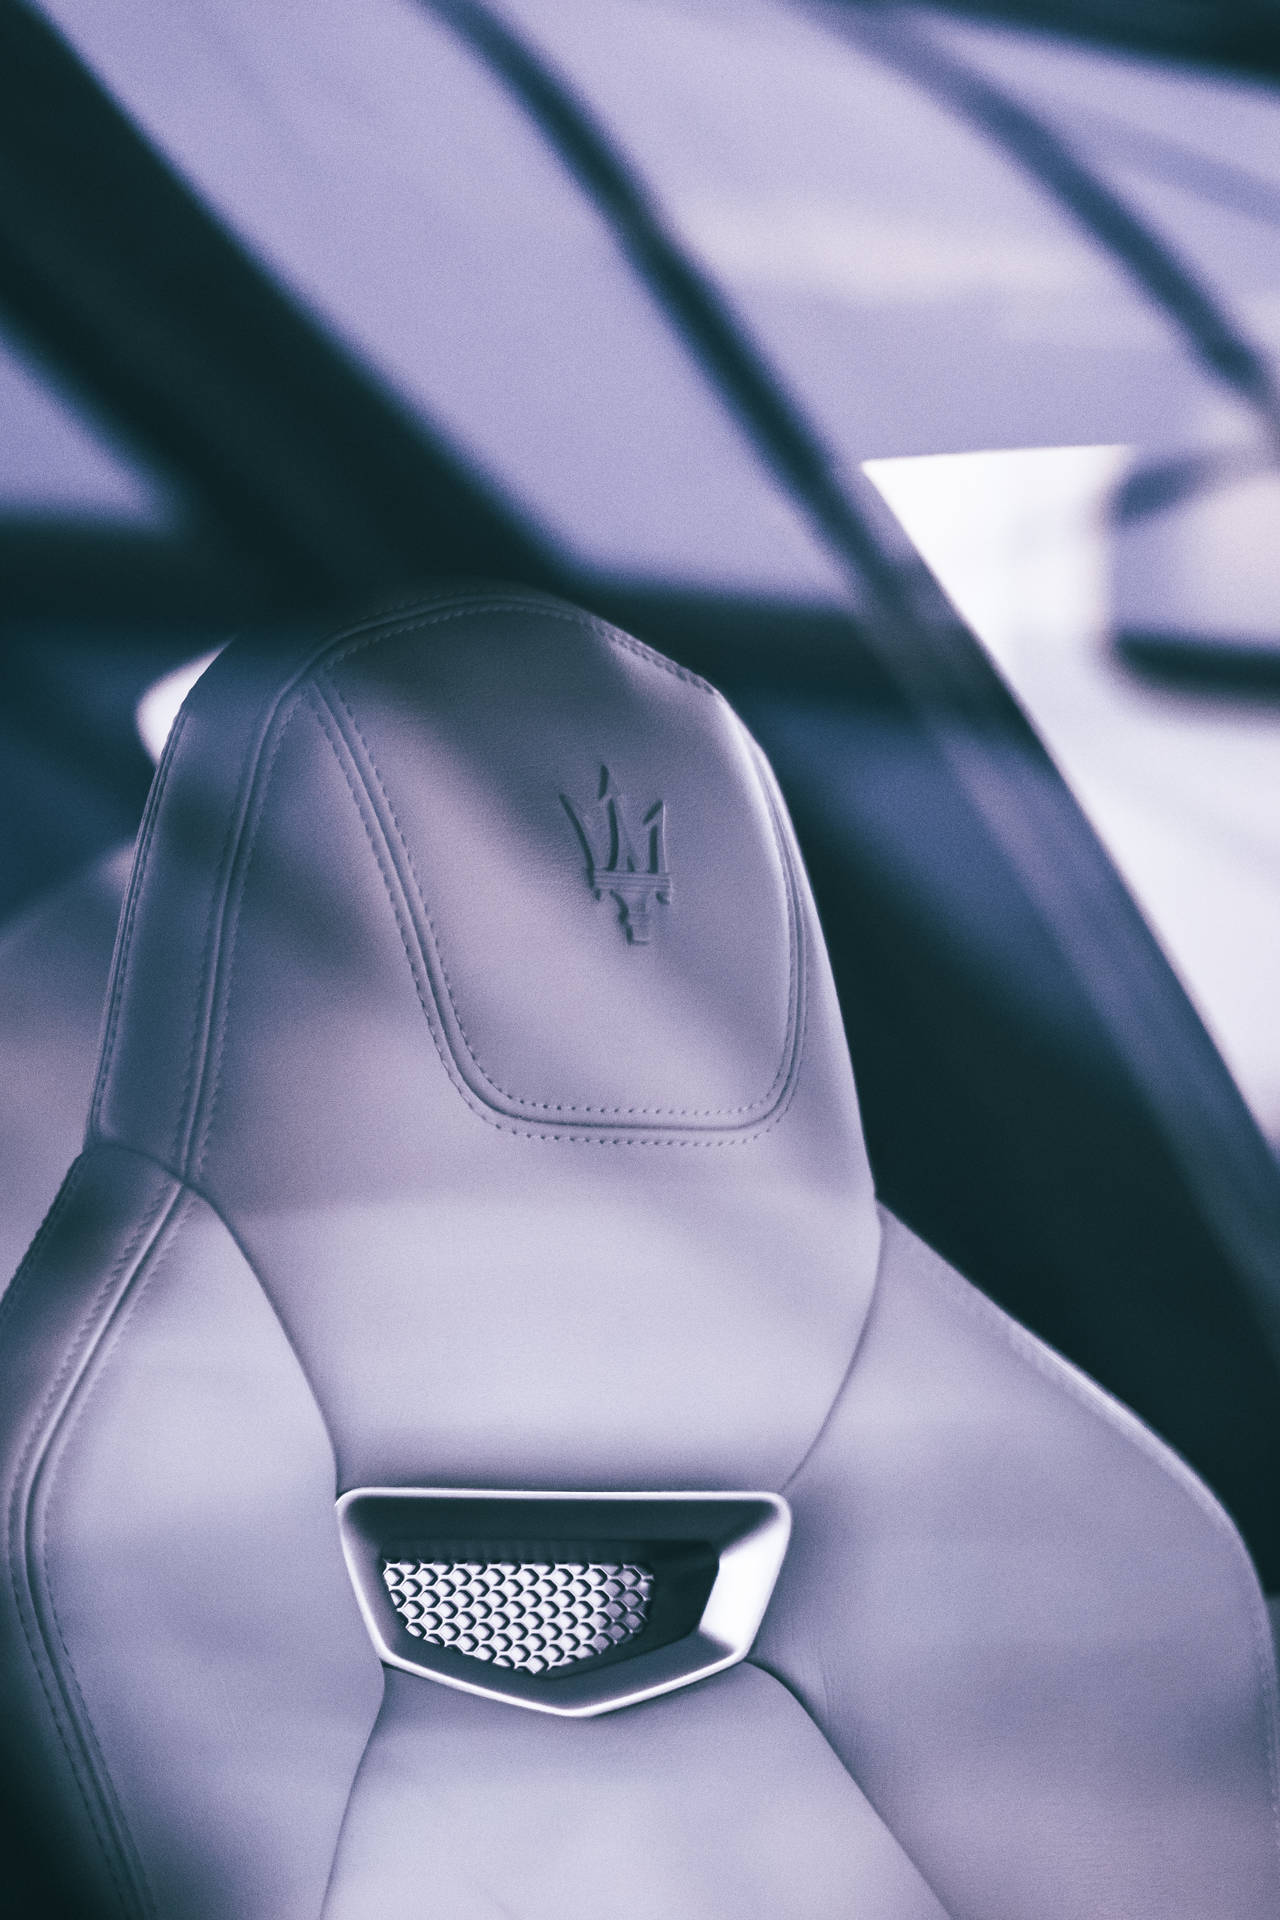 Maserati Car Seat